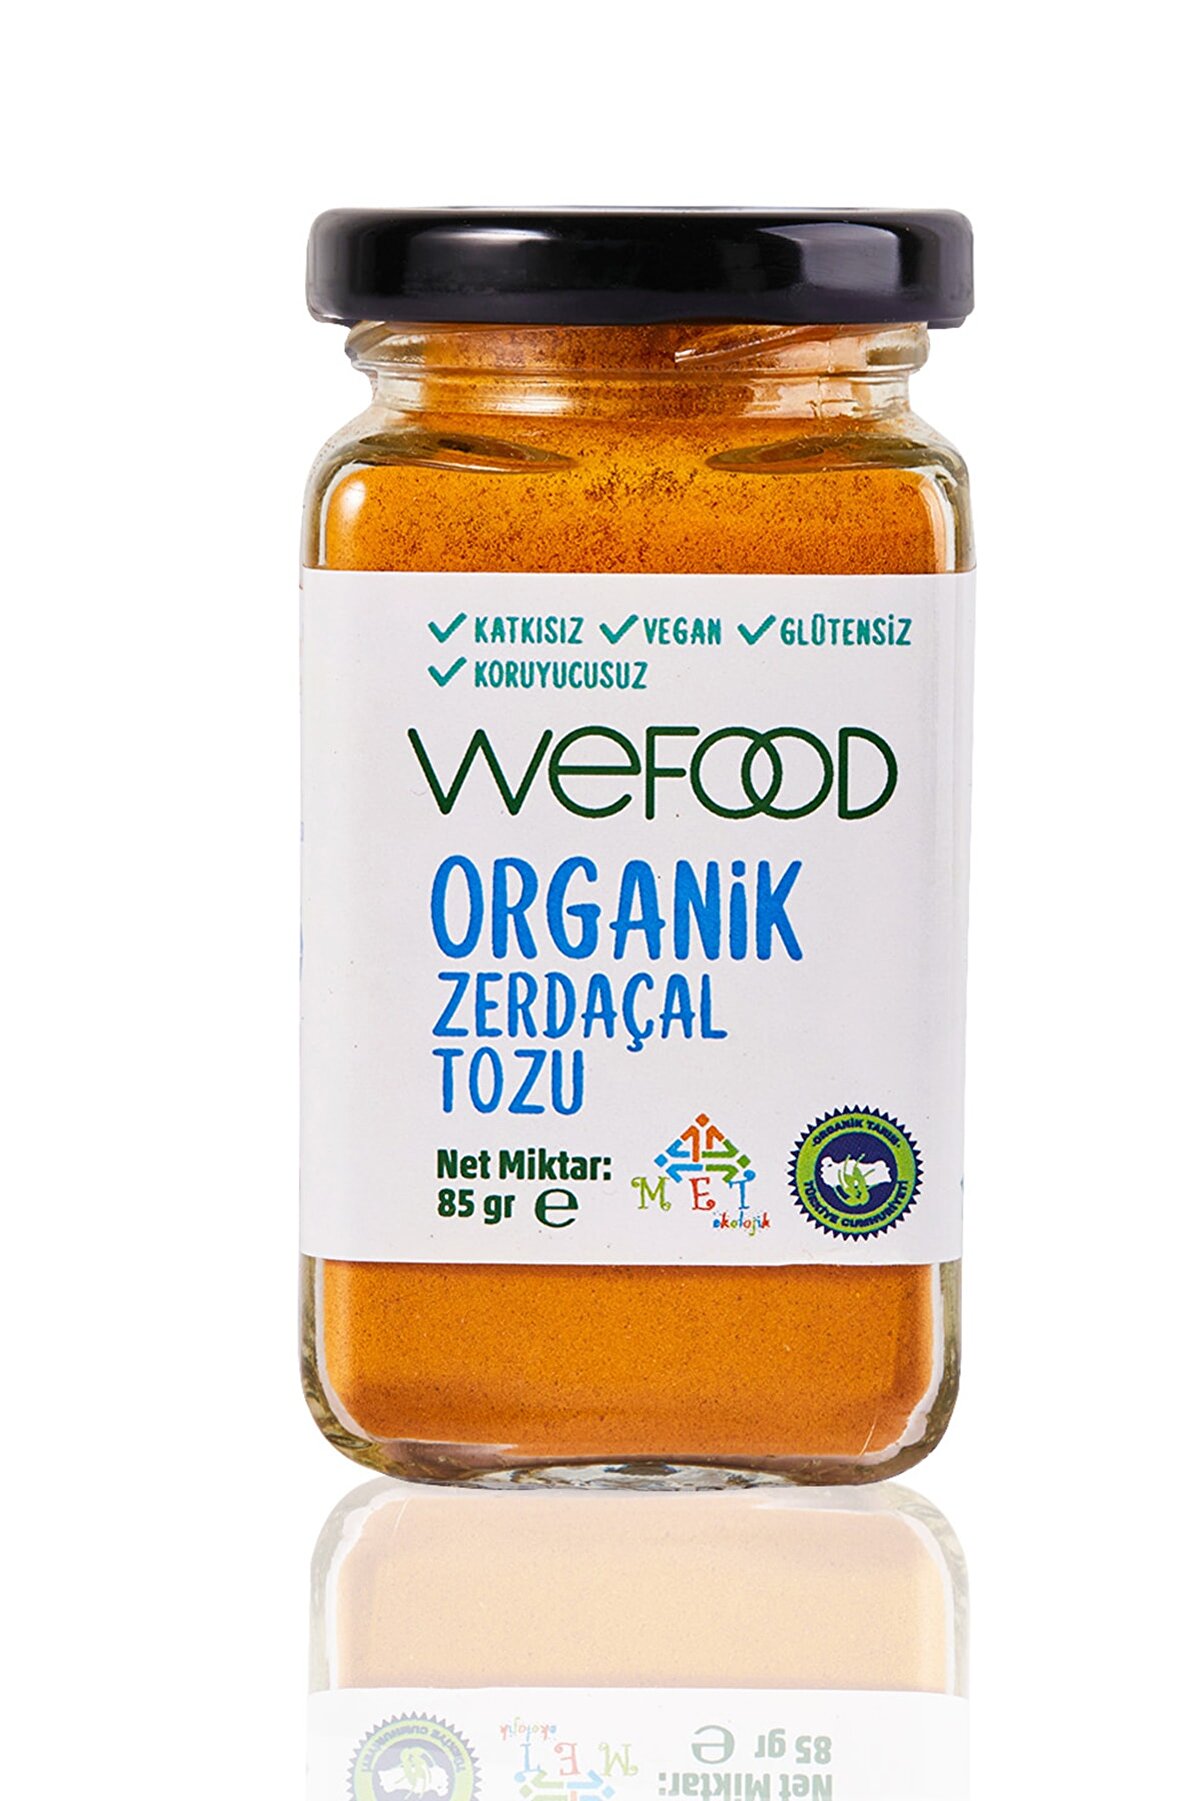 Wefood Organik Zerdeçal Tozu 85 gr